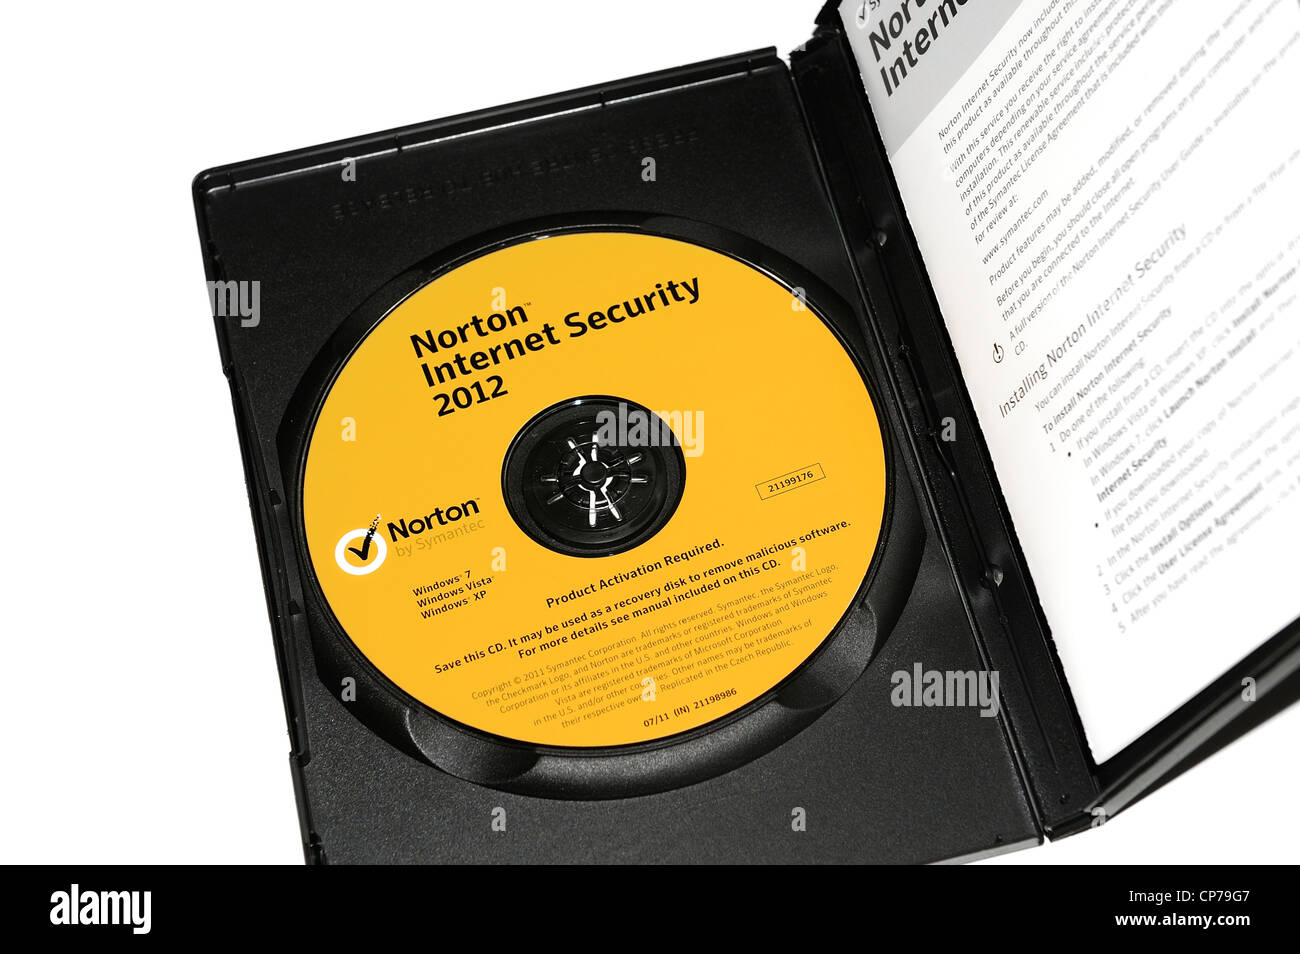 norton internet security 2012 retall case Stock Photo